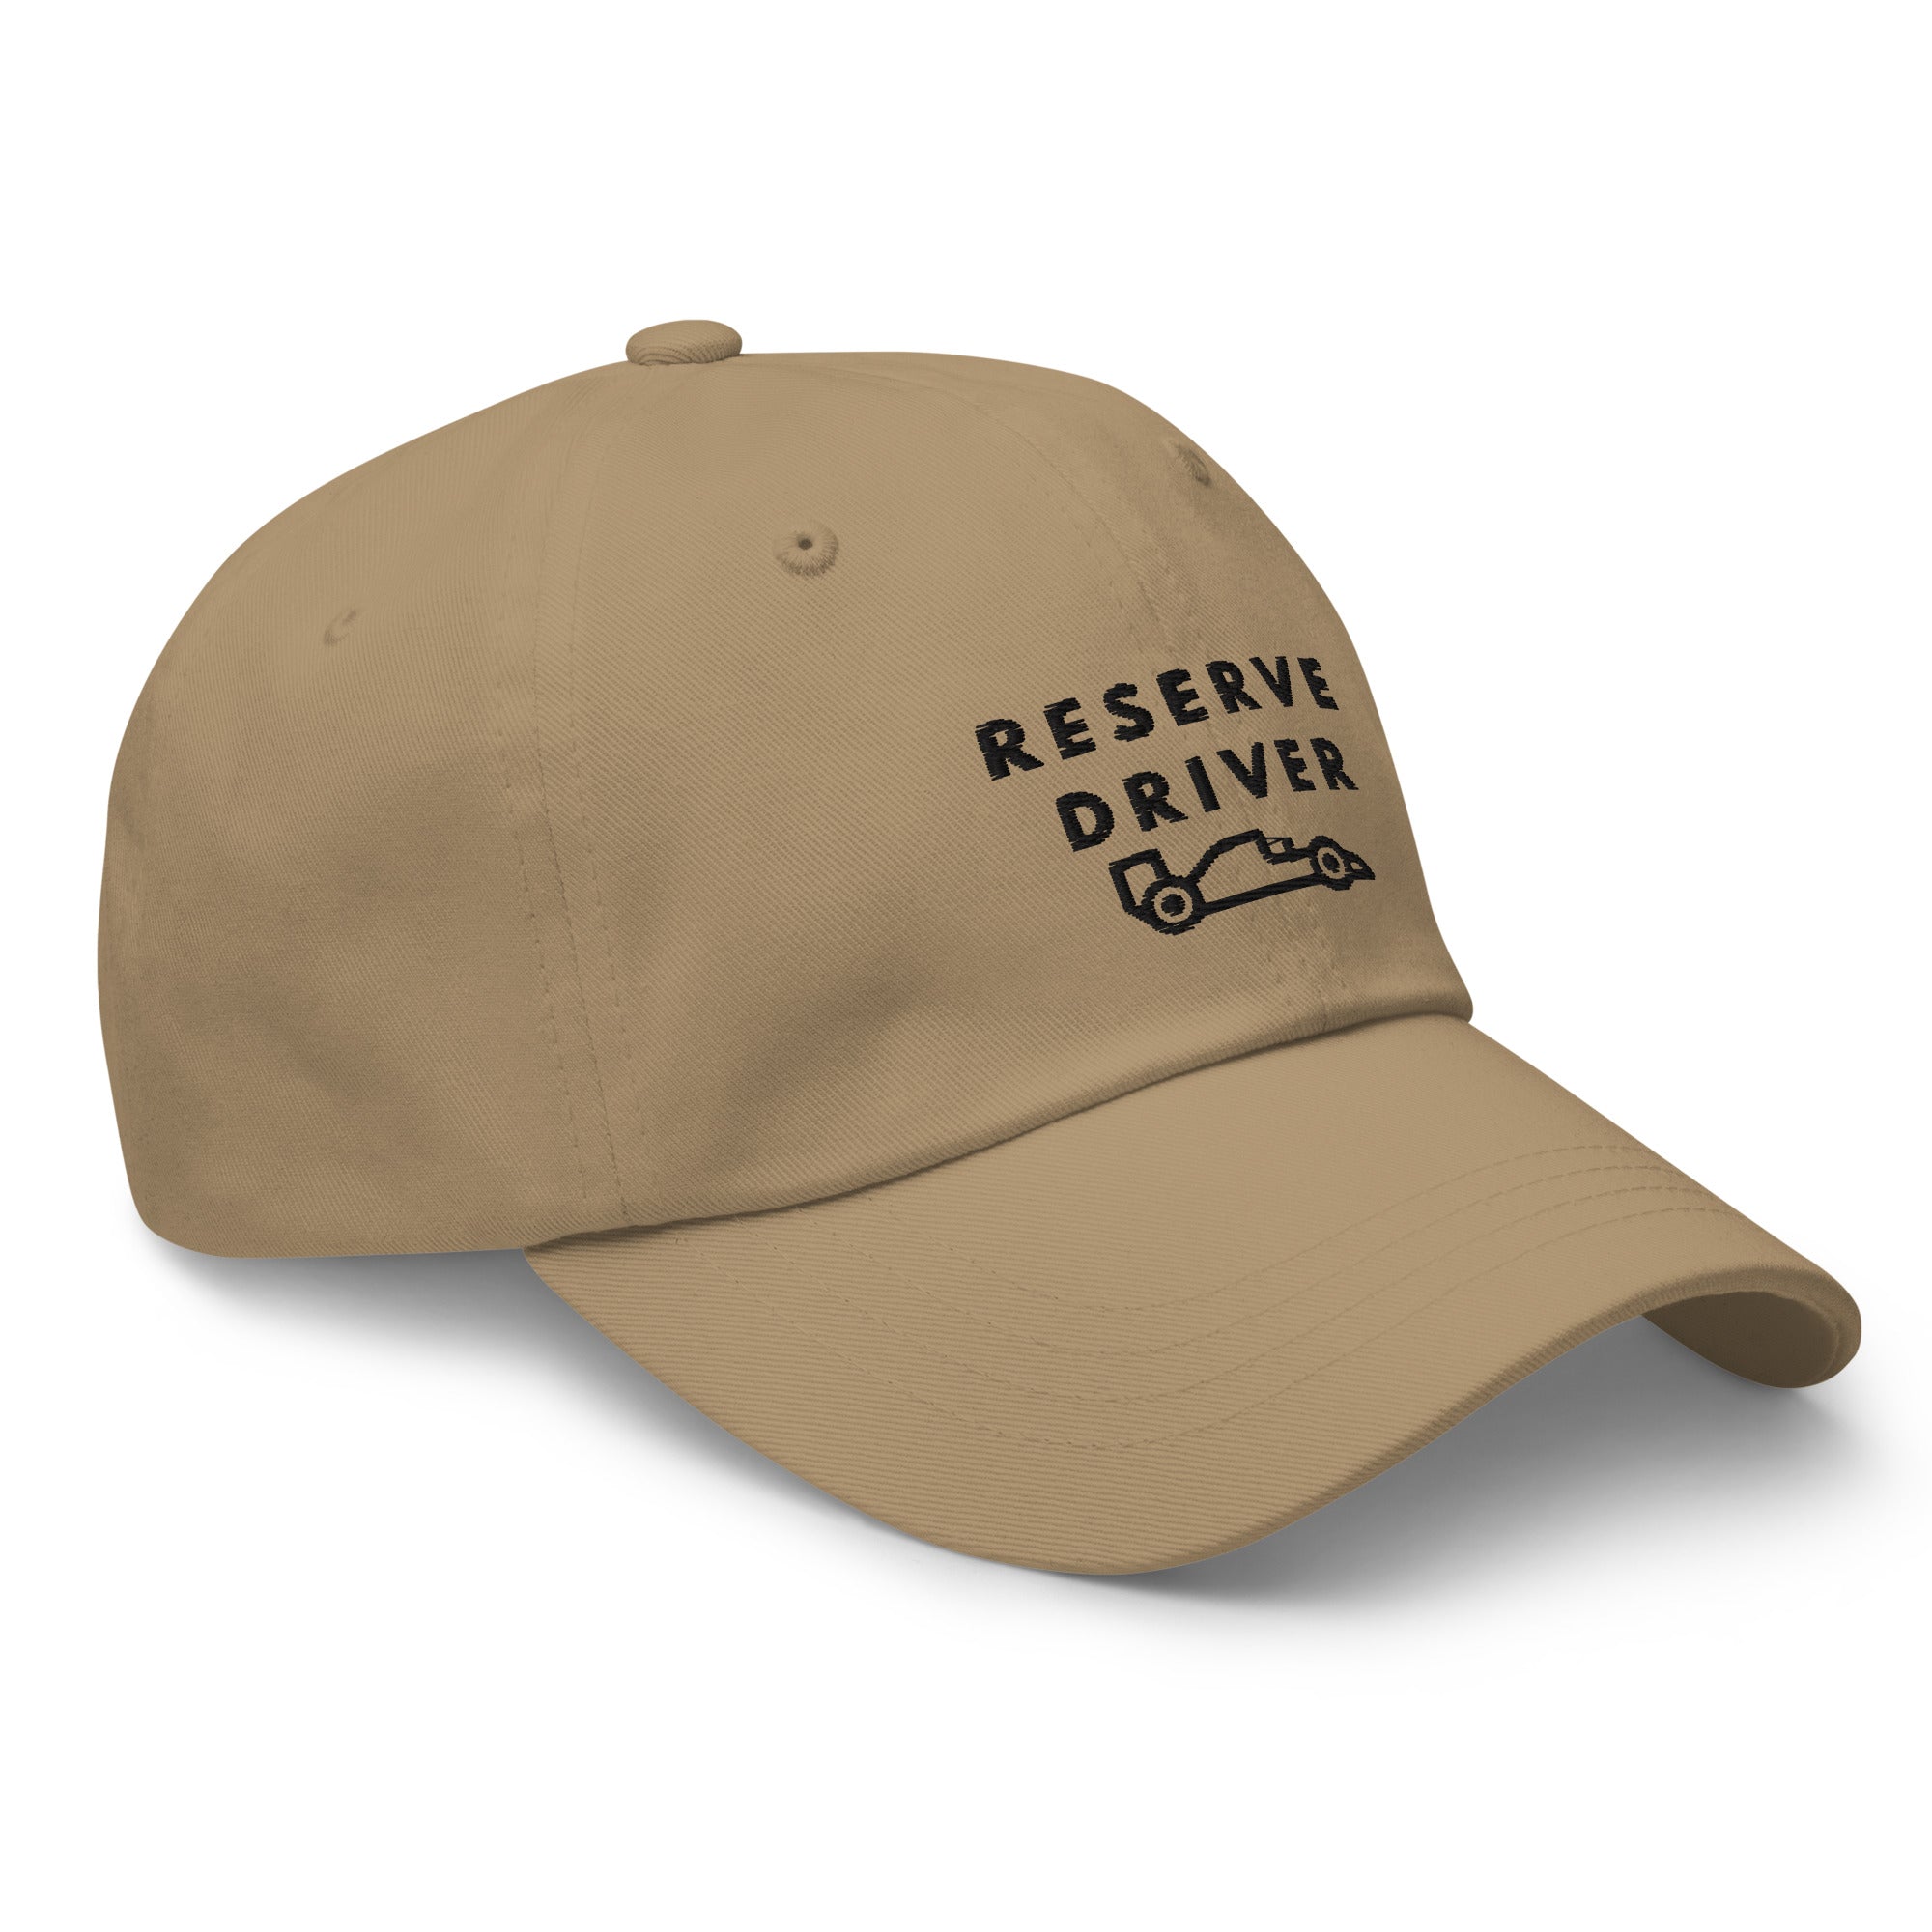 Reserve Driver Embroidered Dad hat - FormulaFanatics